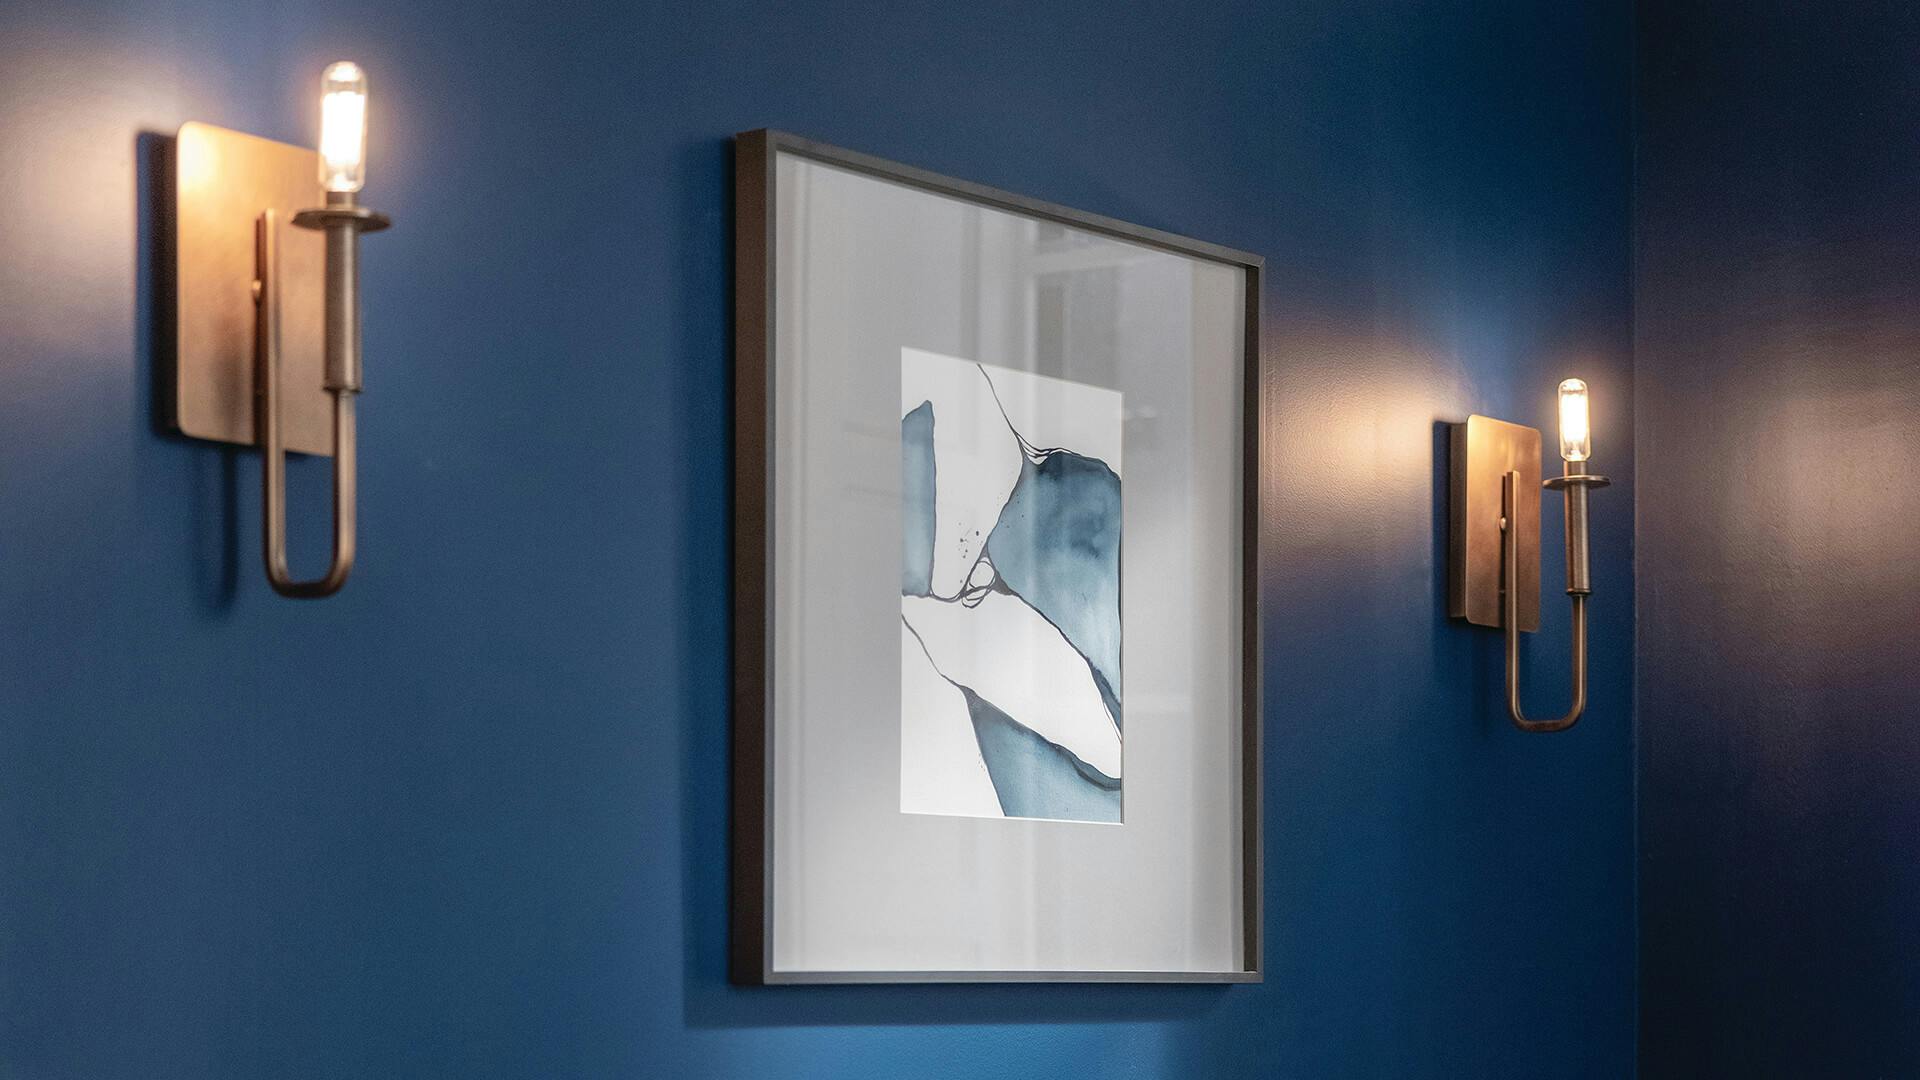 Two lit Alden sconces against a deep blue wall surround a hung illustration